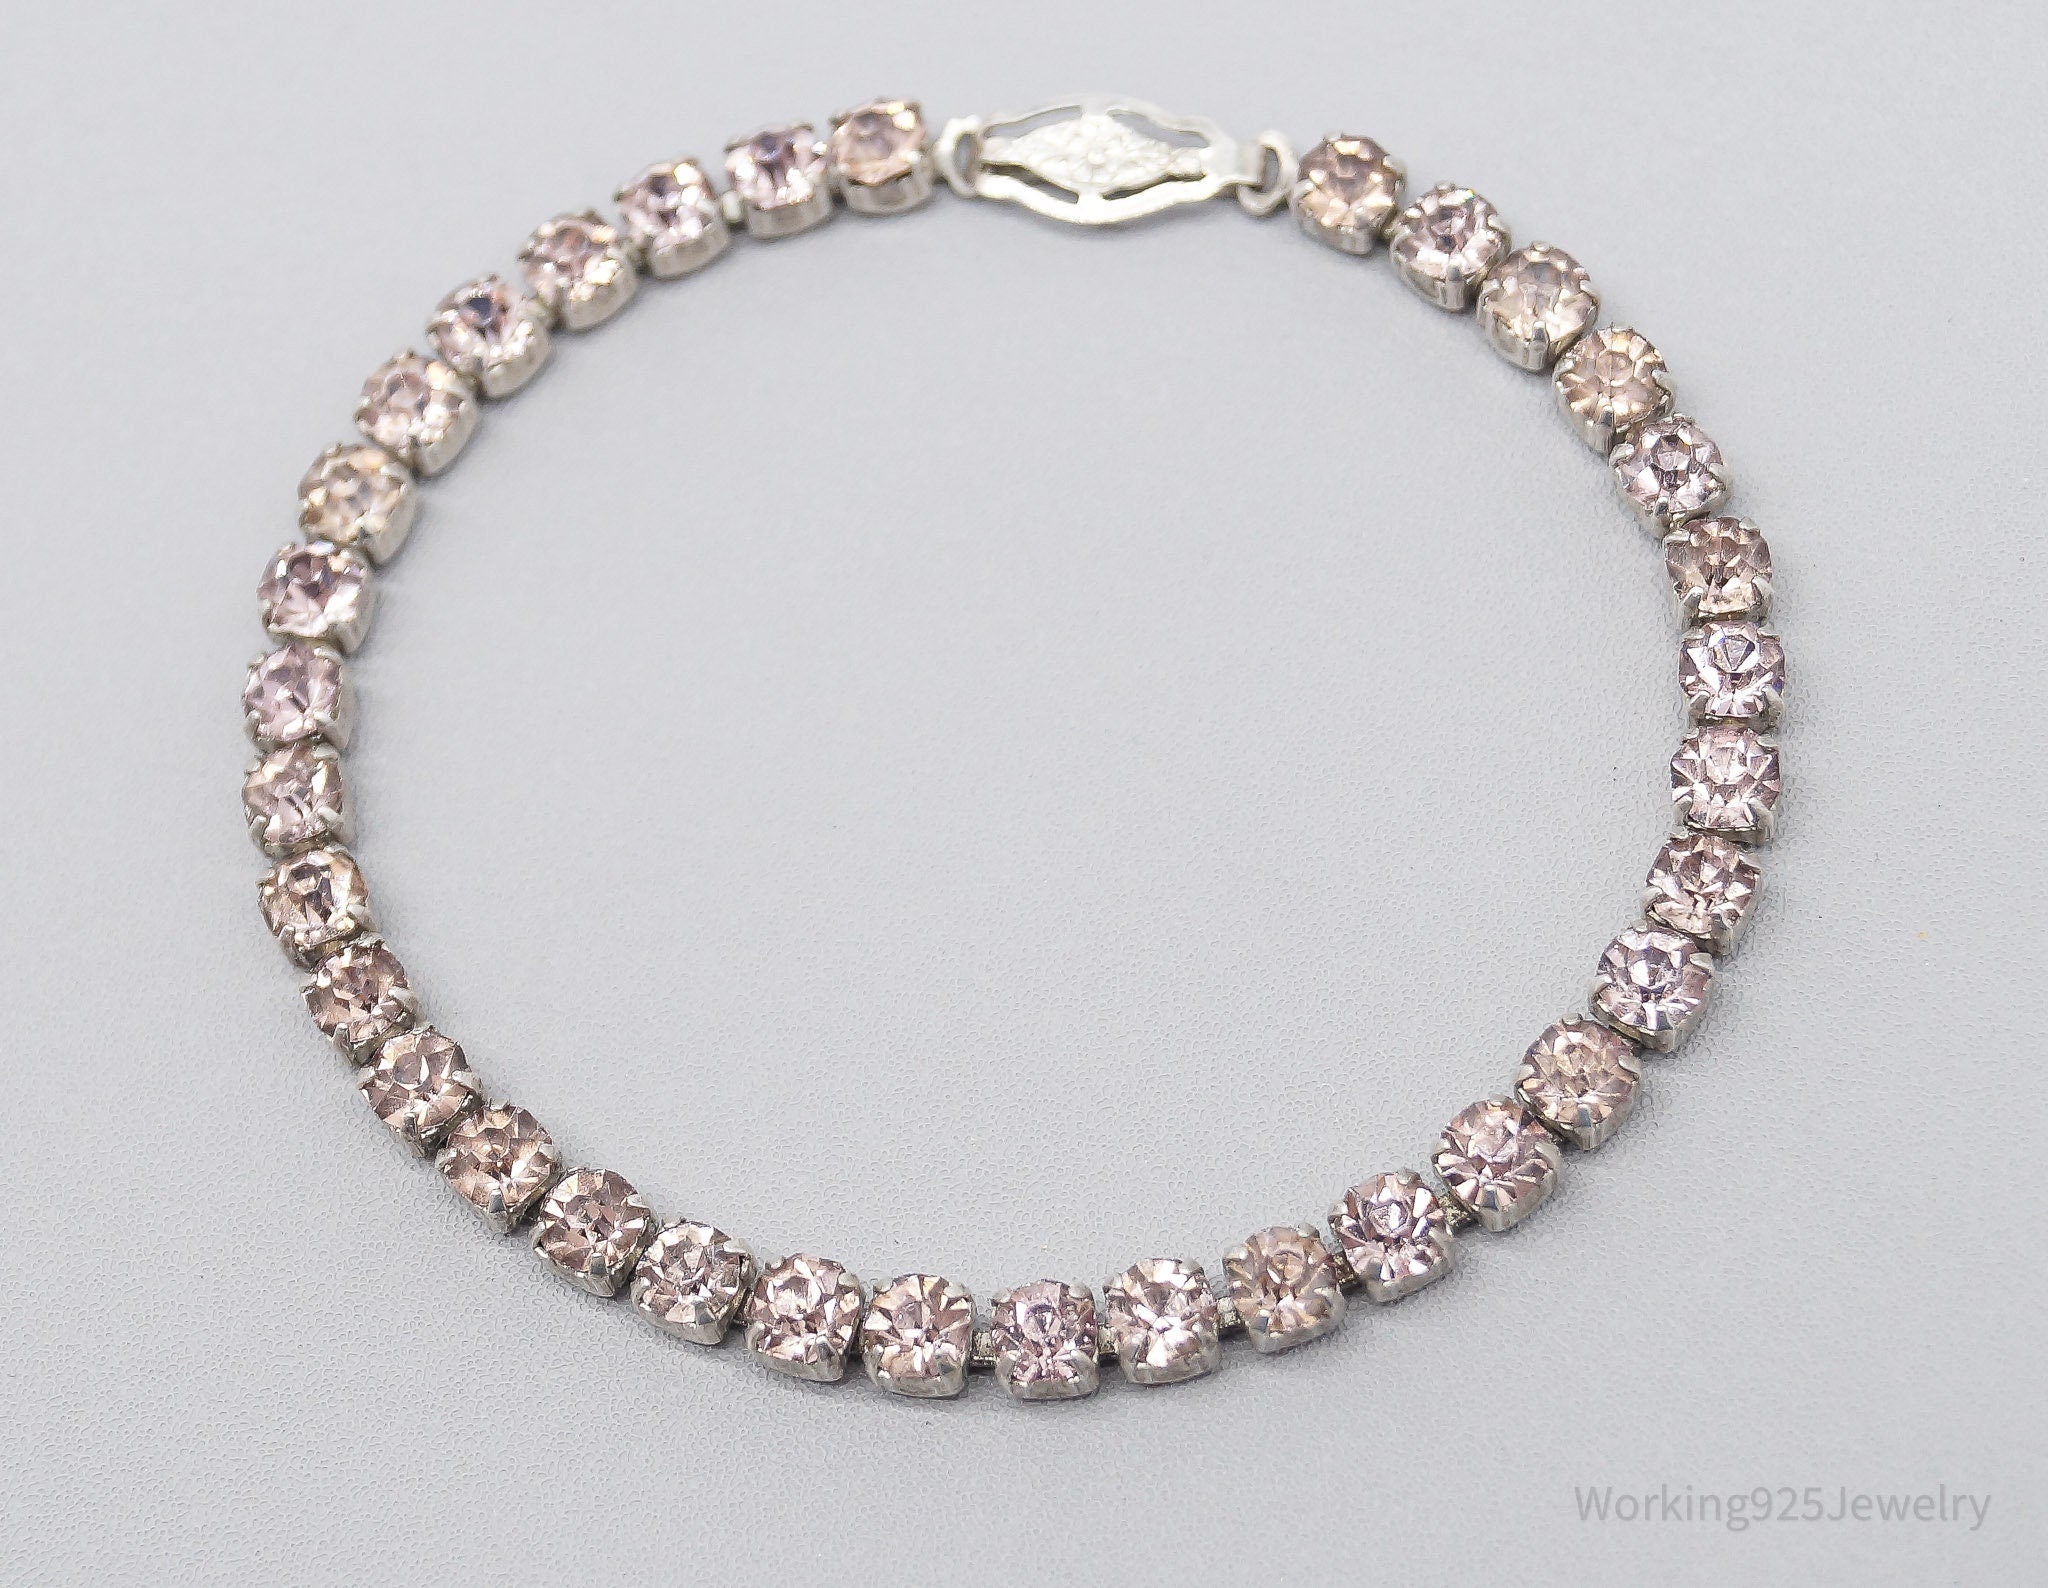 Antique Art Deco Pink Rhinestone Sterling Silver Bracelet - 6 7/8"